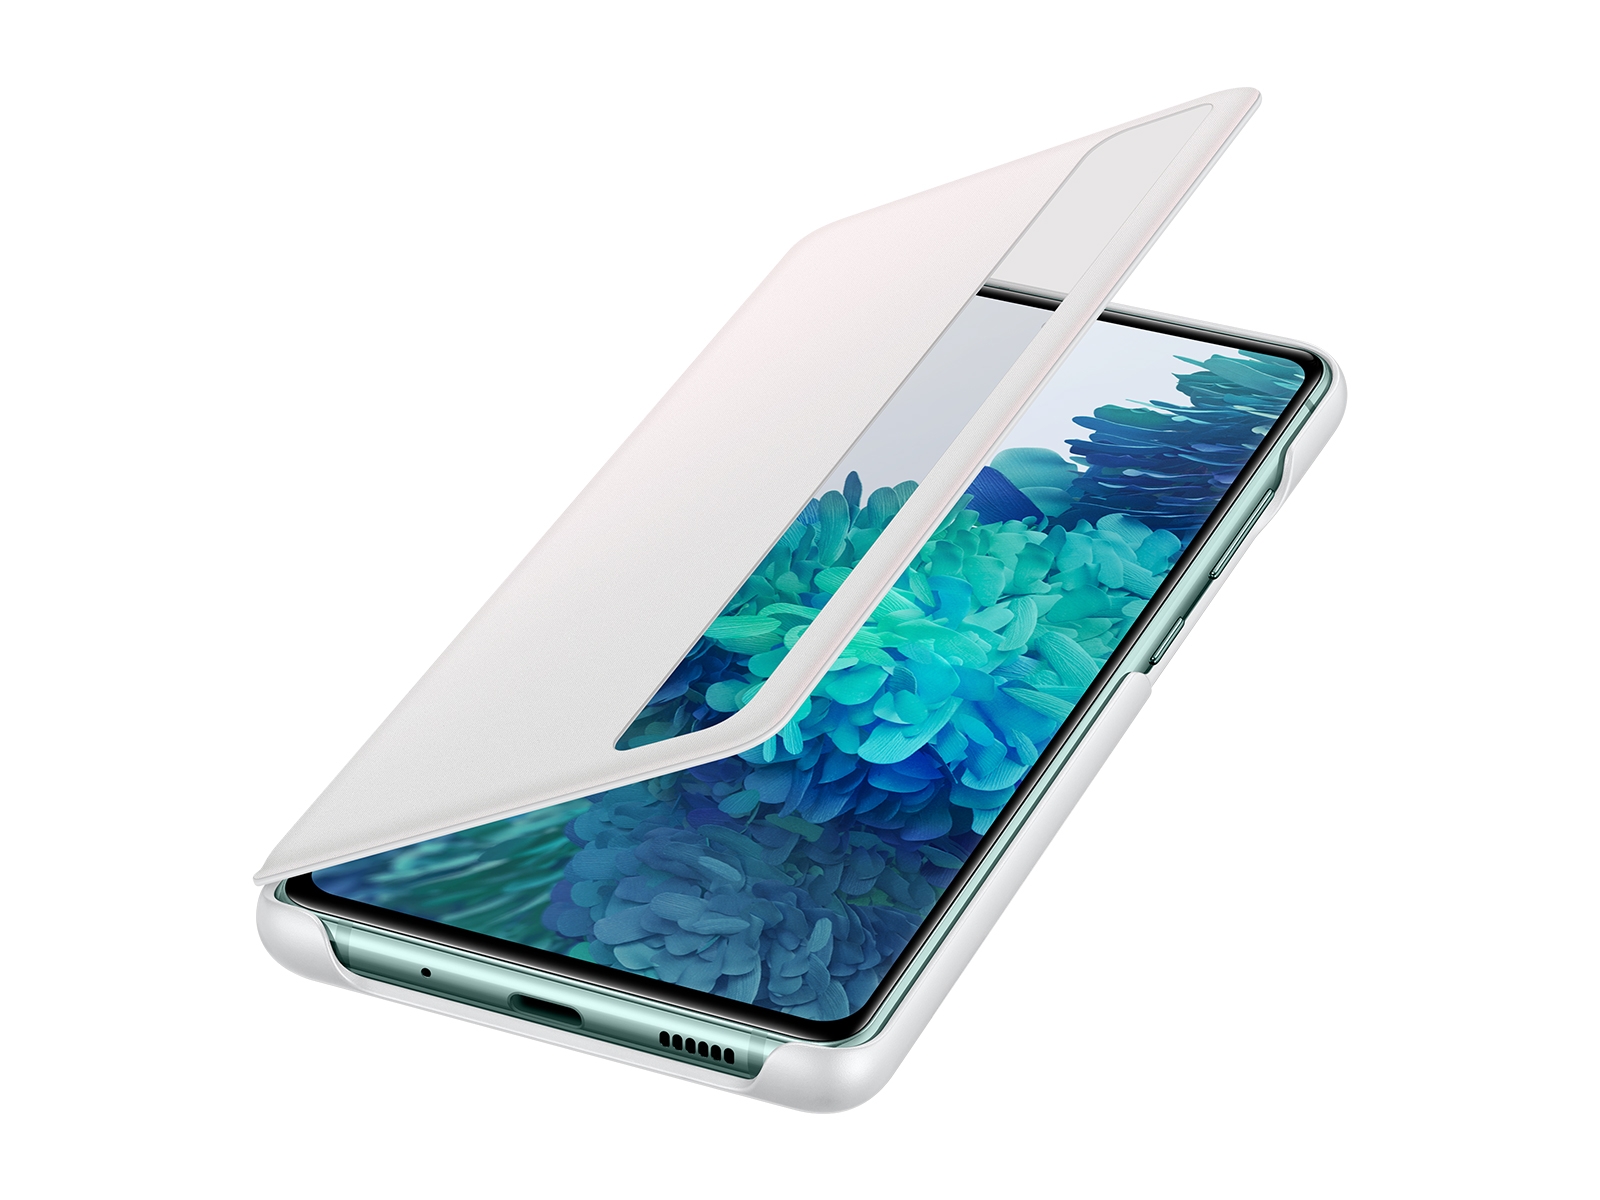 Galaxy S20 FE 5G Silicone Cover, White Mobile Accessories - EF-PG780TWEGUS